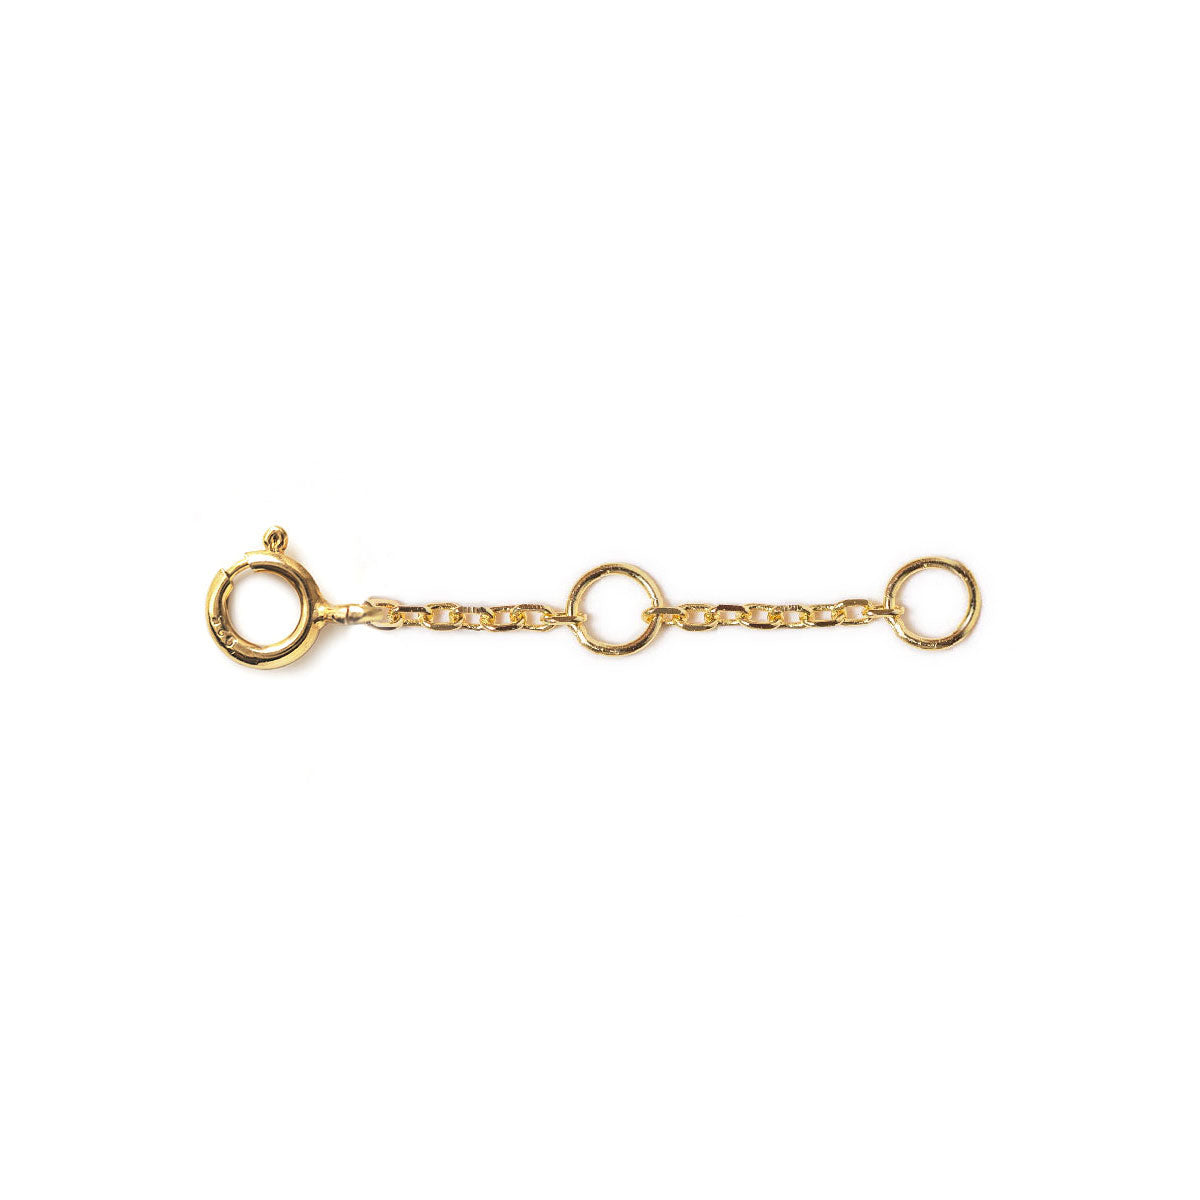 gold chain extender